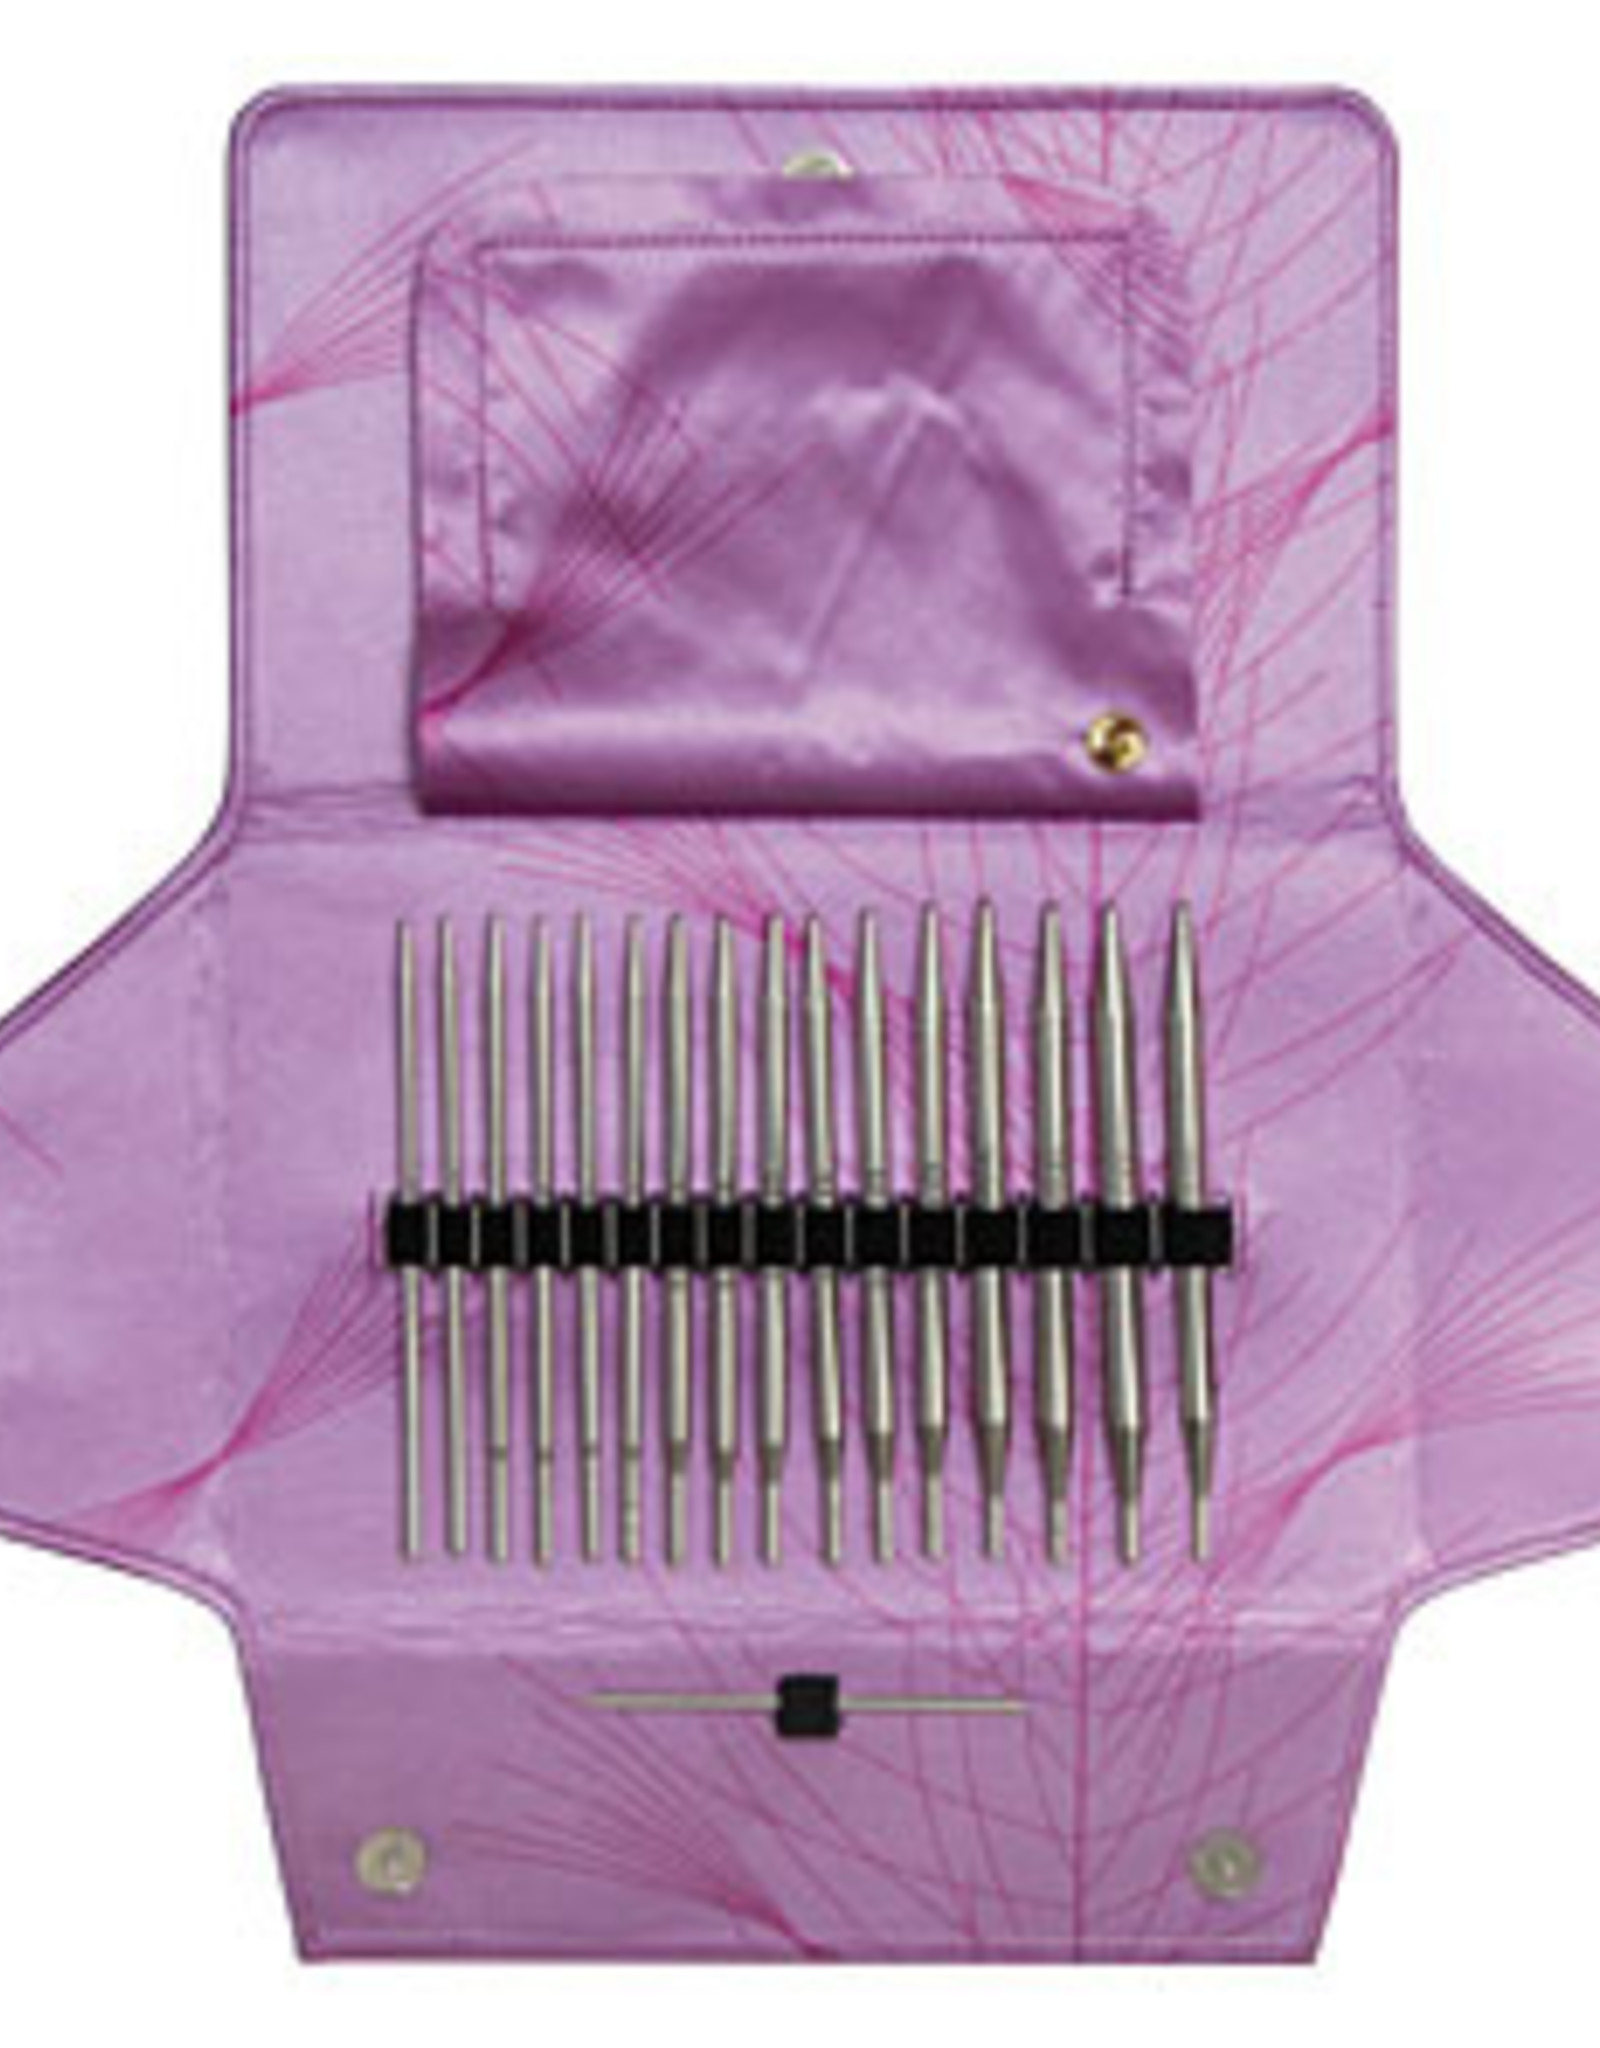 ADDI TURBO CLICK Bamboo Interchangeable Knitting Needle sets at